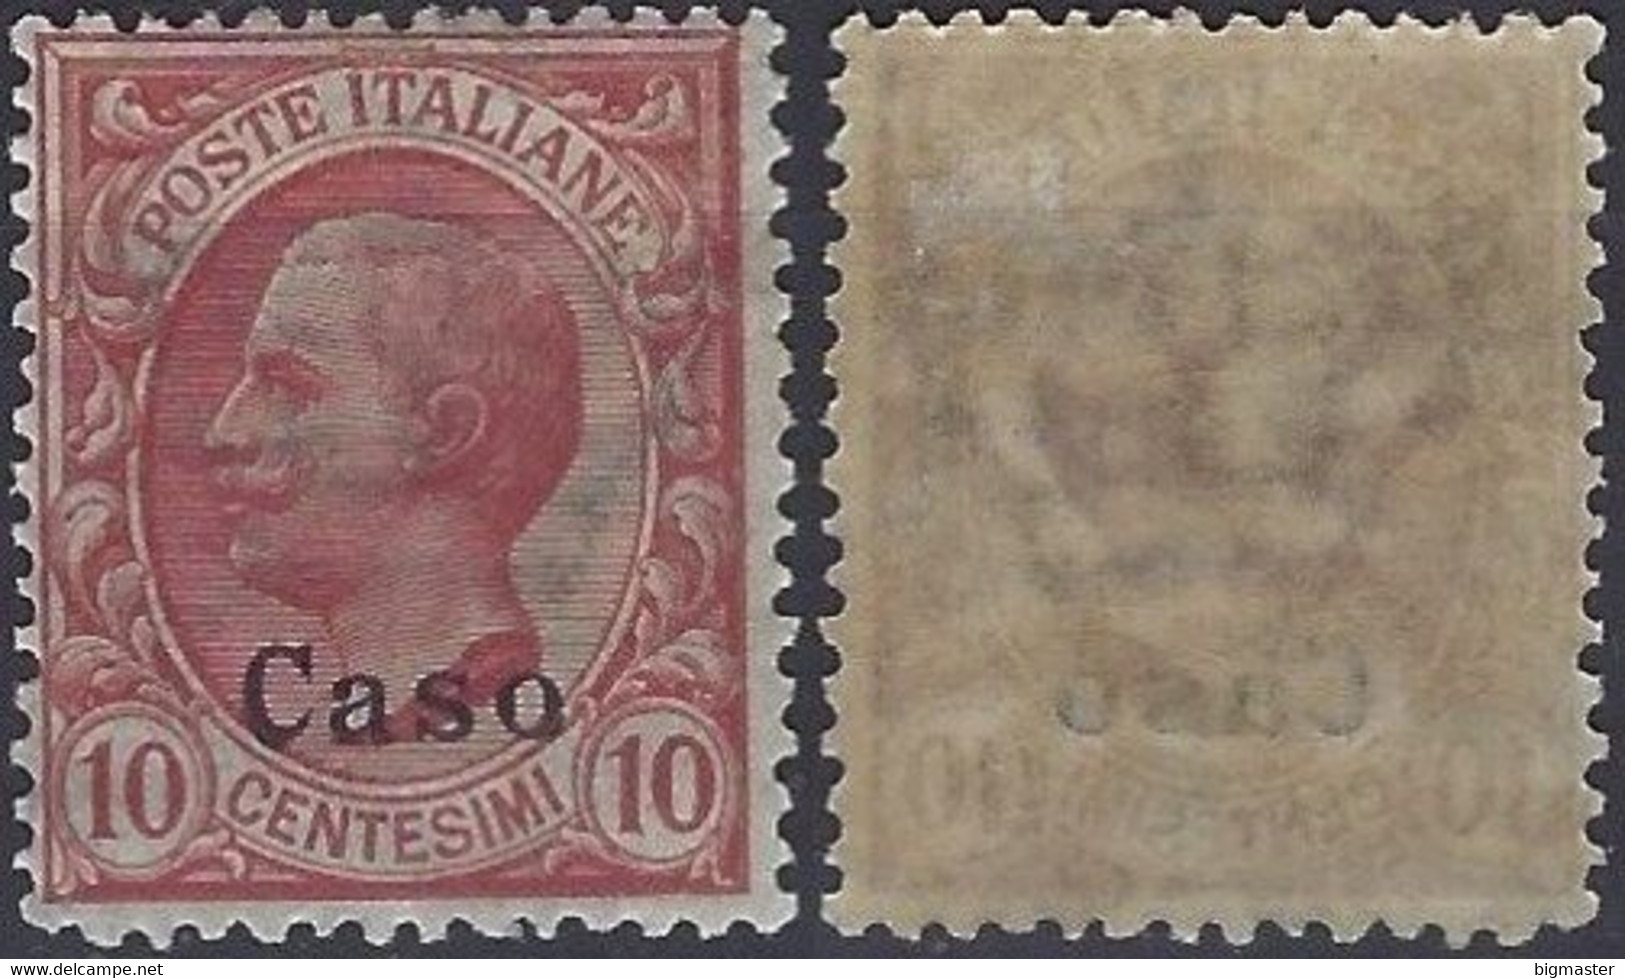 1912 Regno D'Italia IG 1912 IT-EG CS3 10c  Italy Stamps Overprinted 'Caso' - Ägäis (Caso)